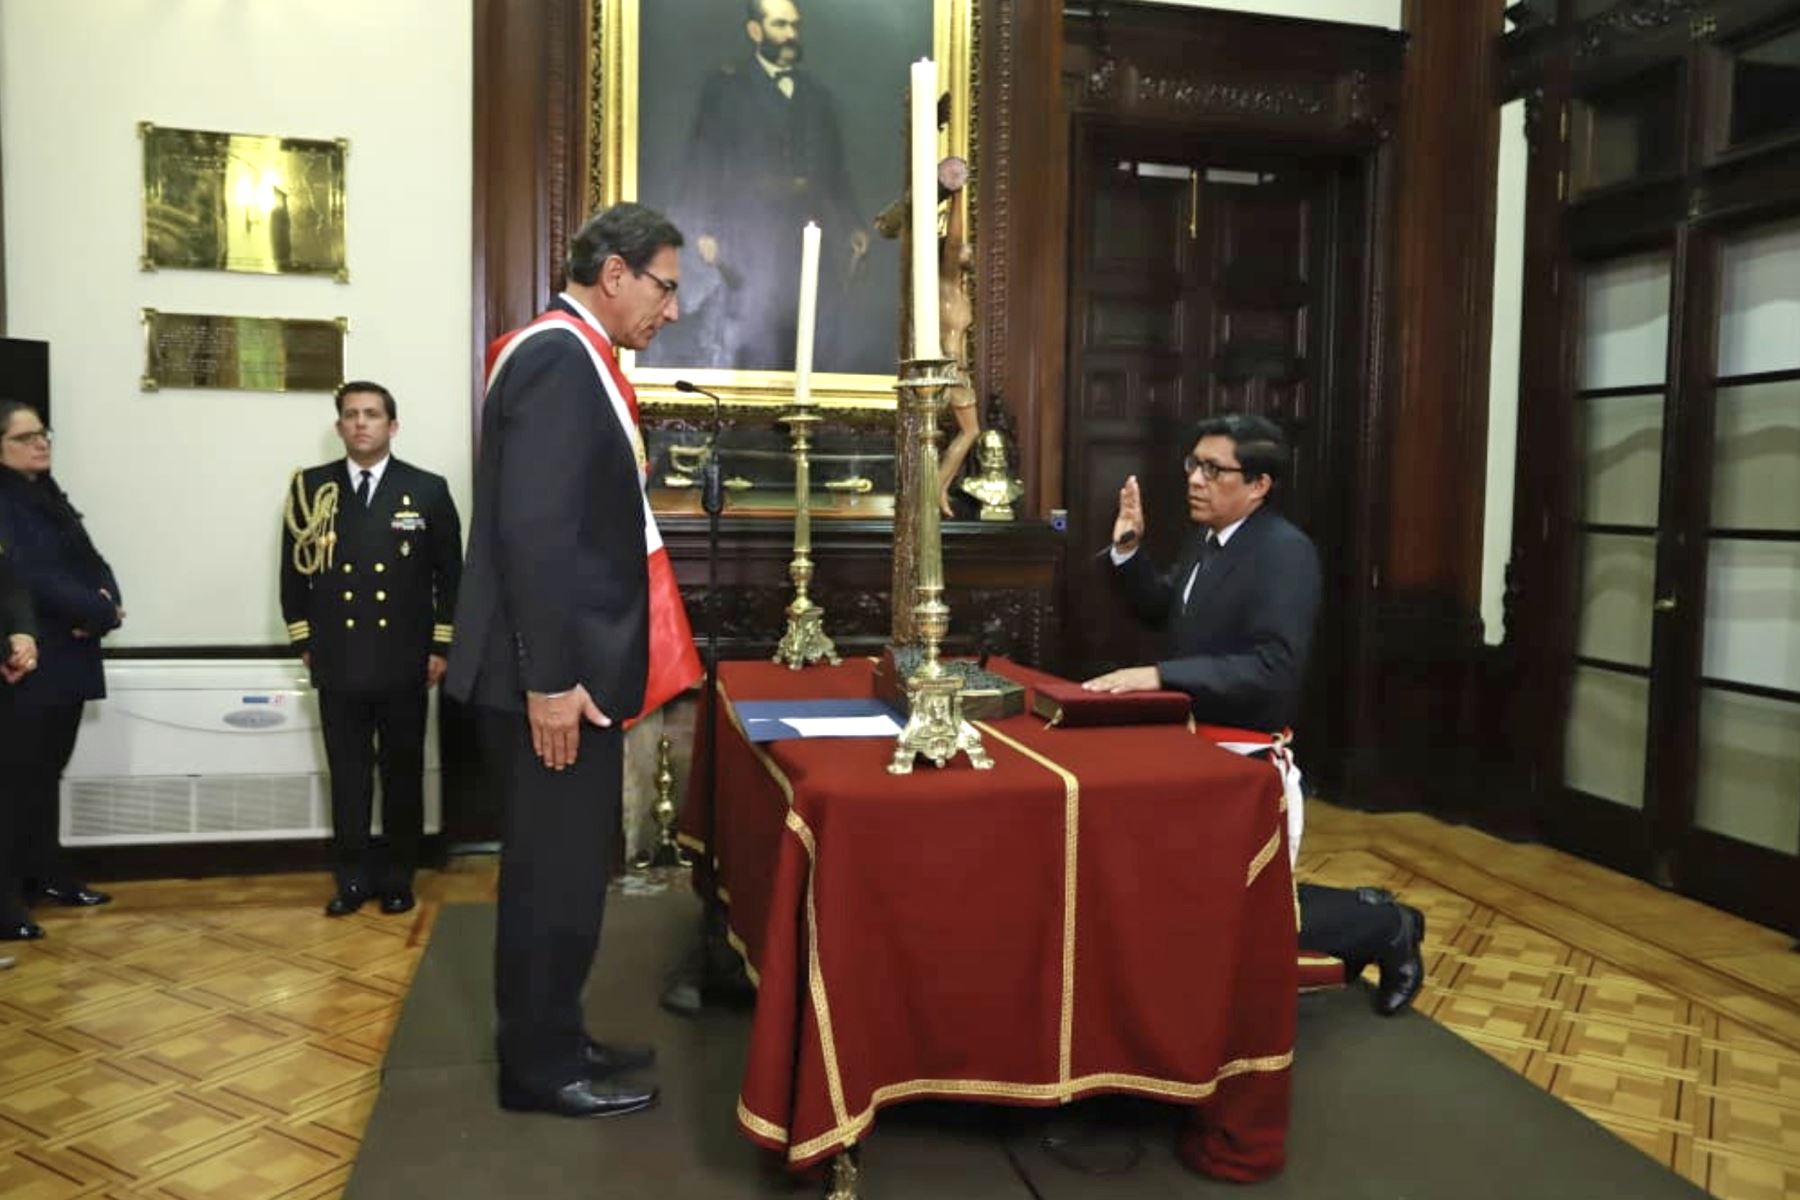 Vicente Zeballos sworn in as new Prime Minister of Peru